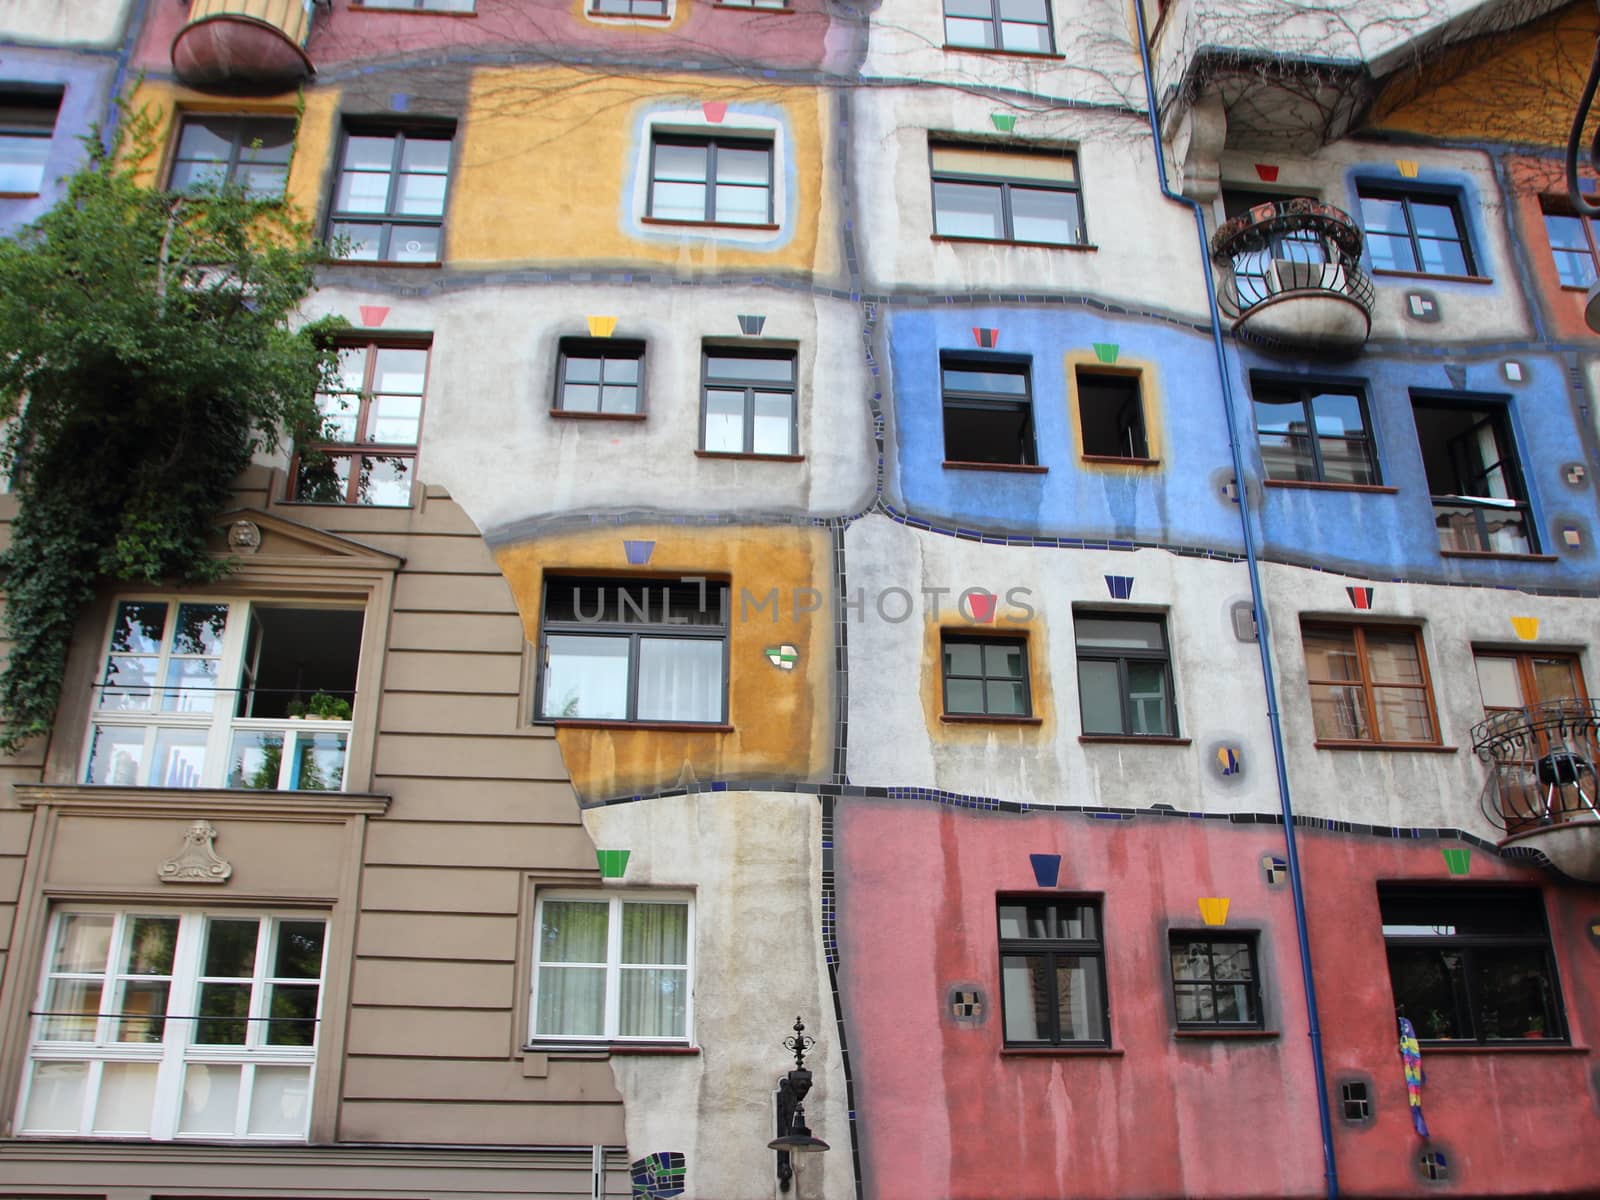 Hundertwasser Colorful City Apartment Building in Vienna Austria by HoleInTheBox